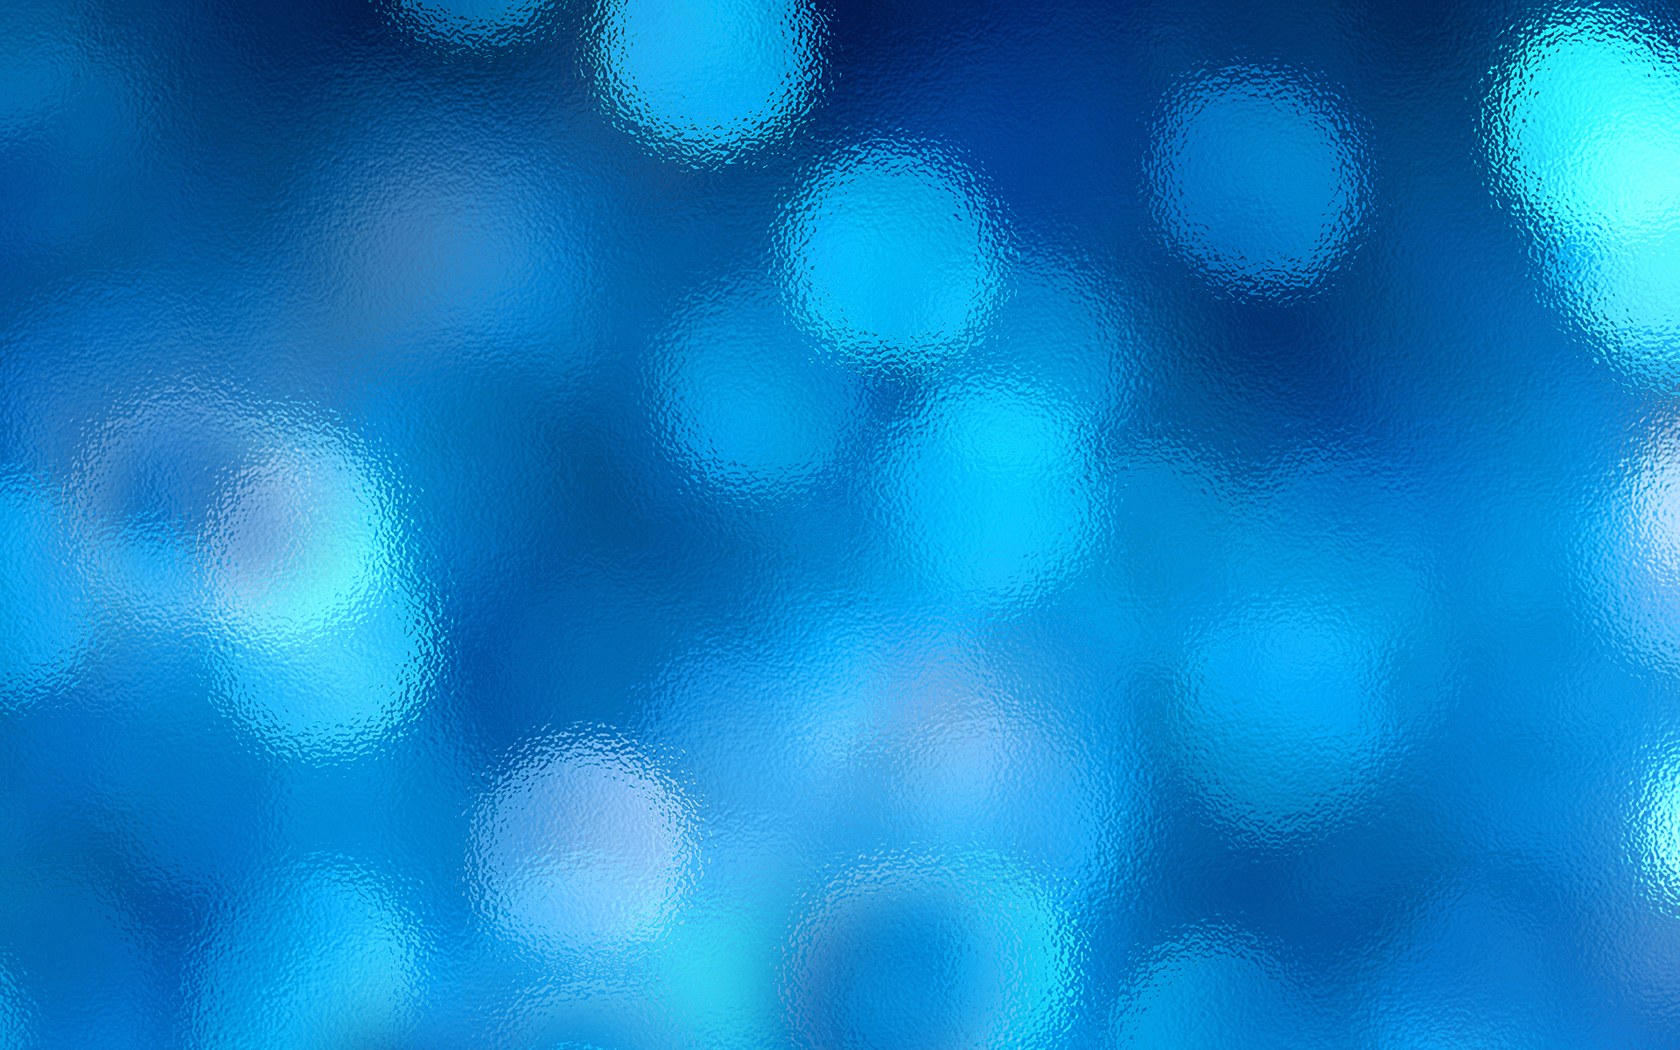  Pictures blue ocean wallpaper 3d graphics wallpapers wallpapers 1680x1050